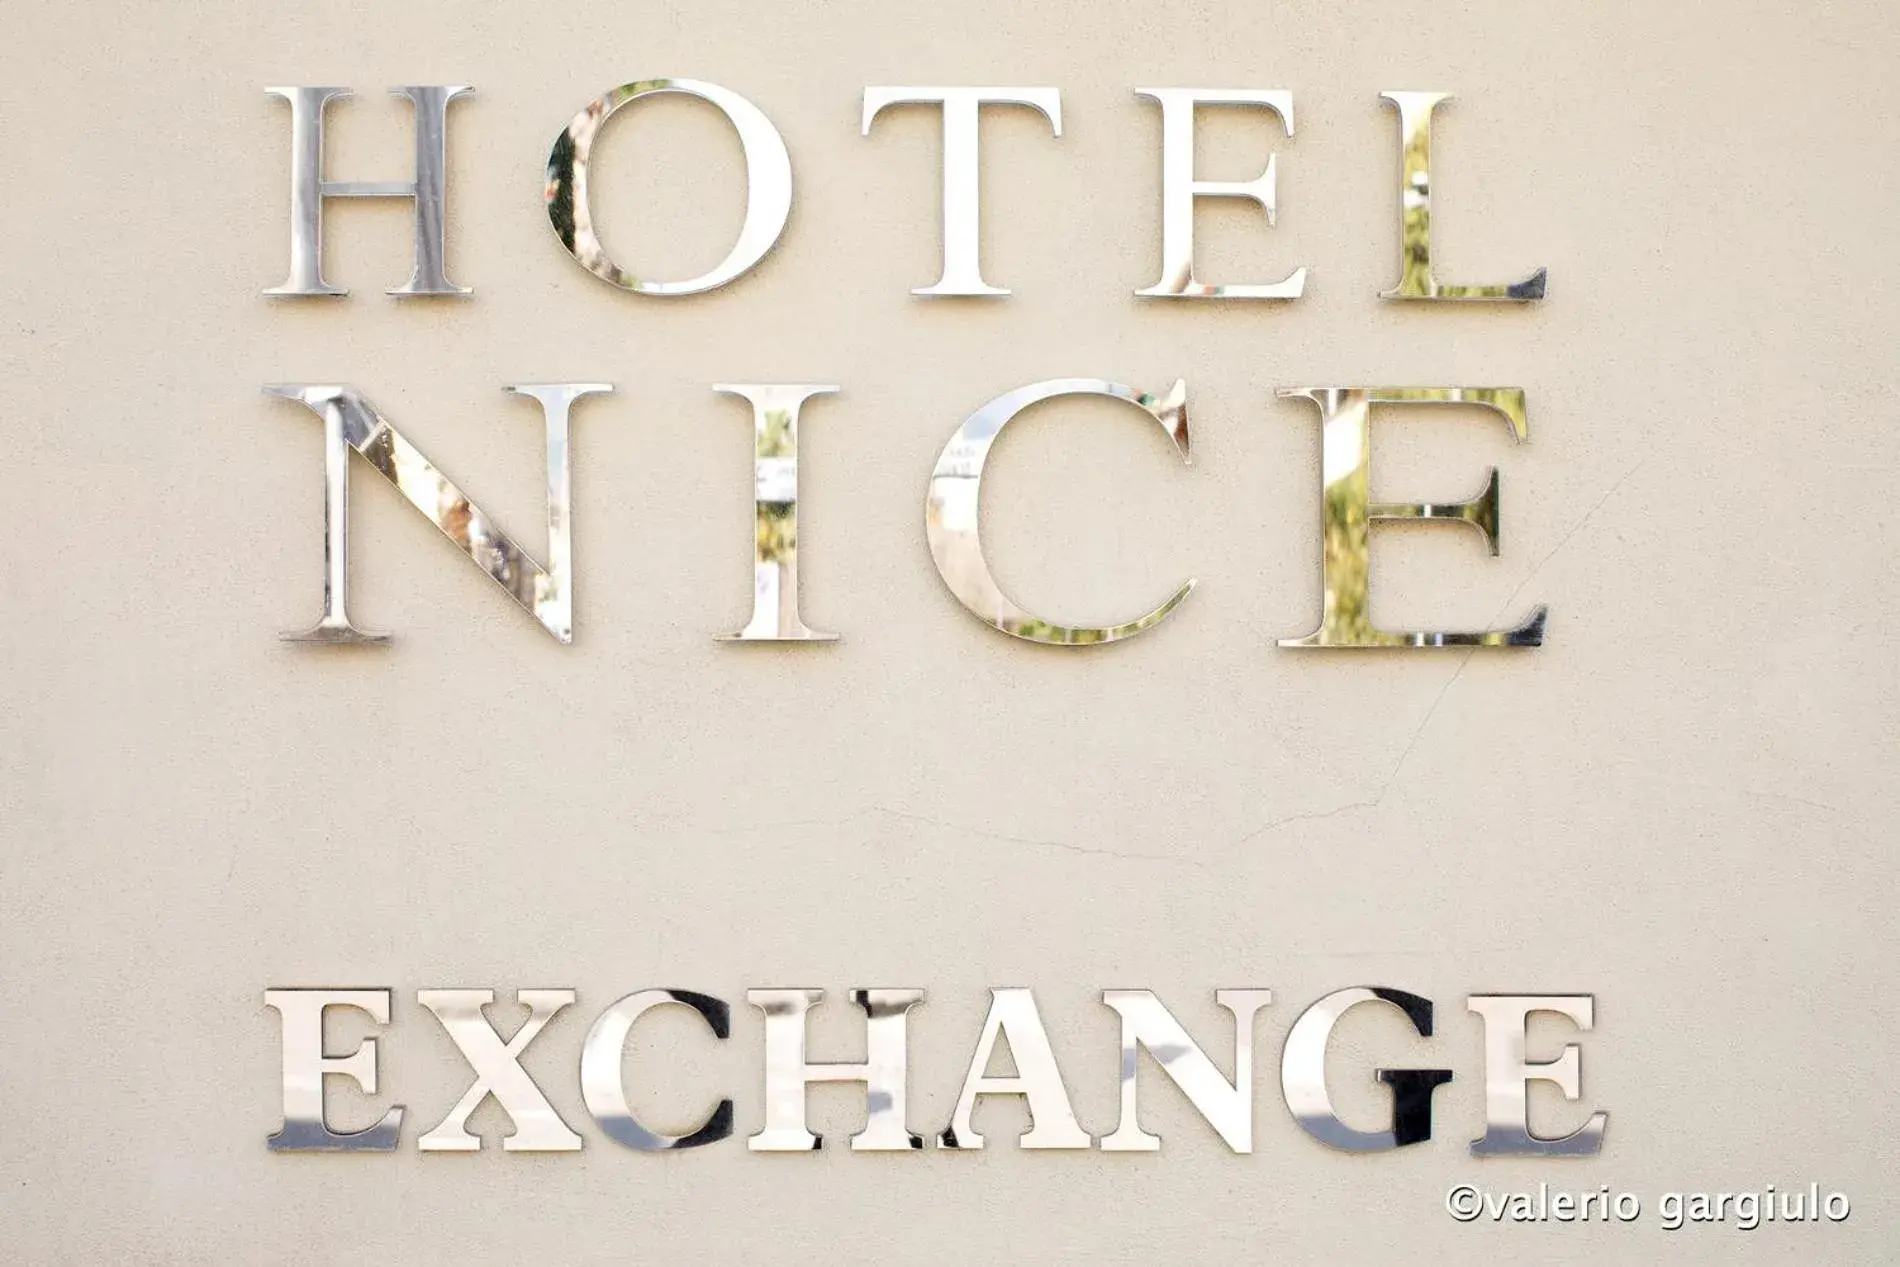 Facade/entrance in Hotel Nice